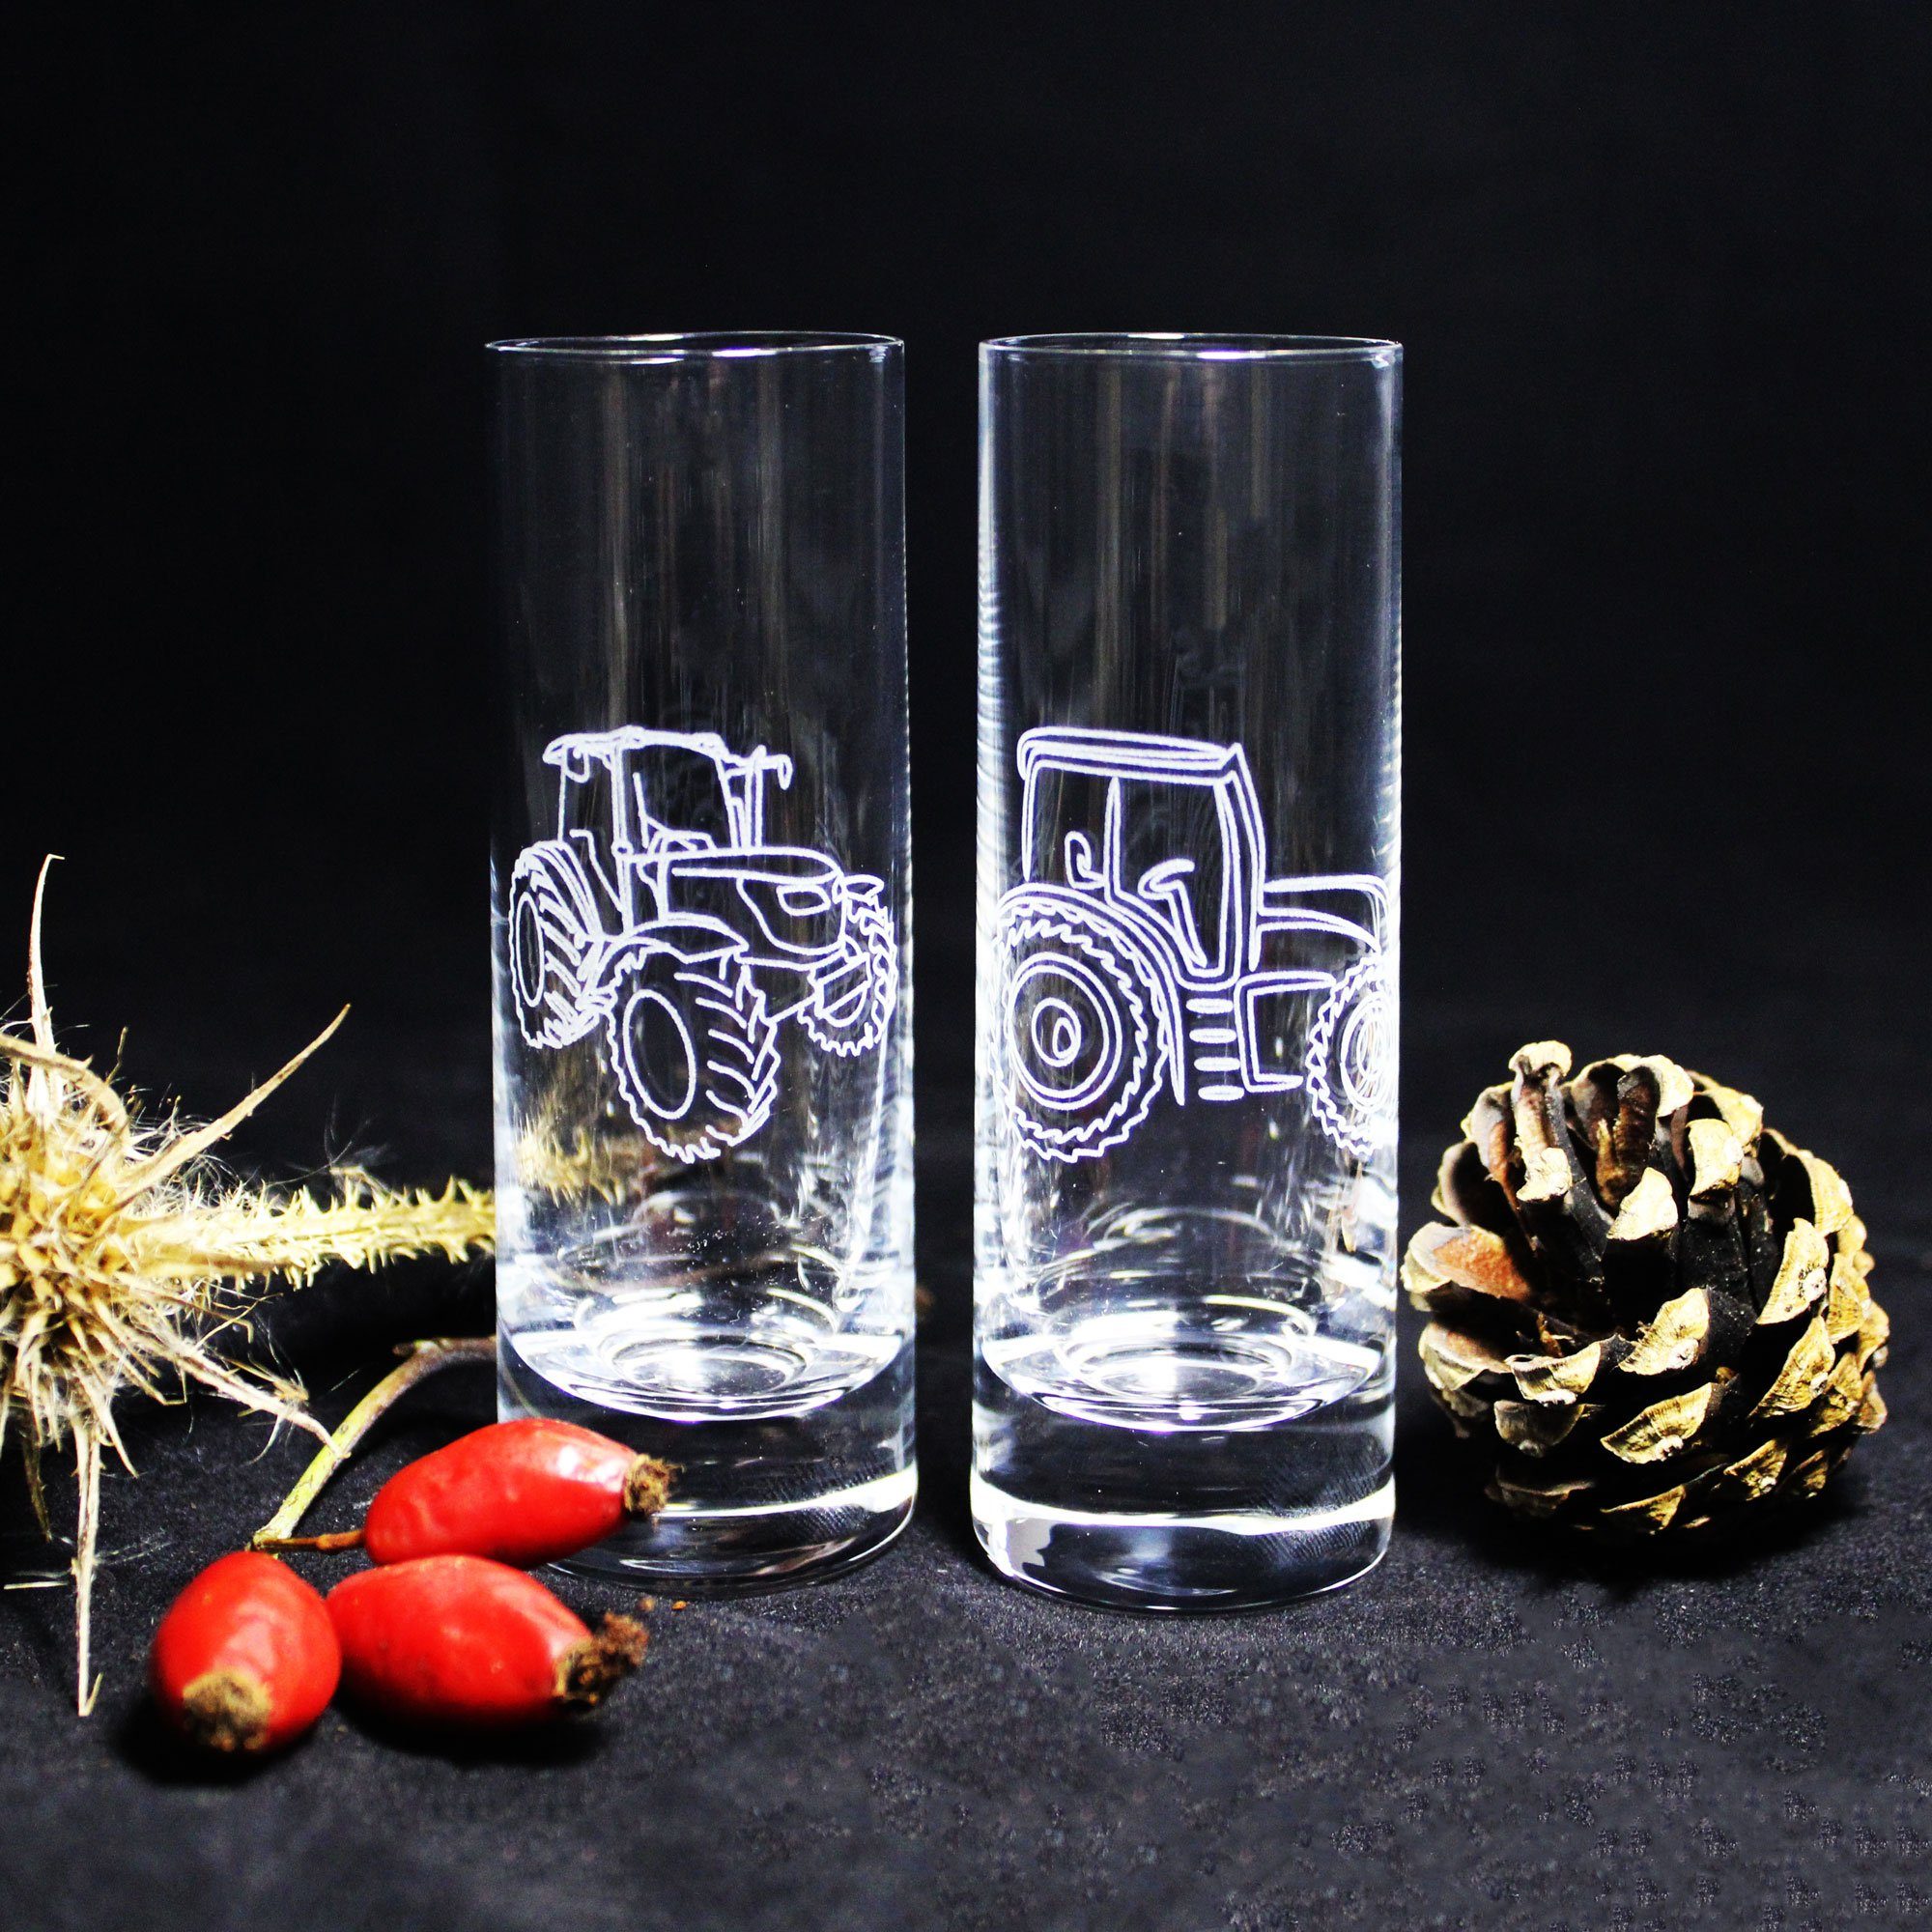 Bohemia Crystal Schnapsglas Barline, Kristallglas, Traktormotive, 6-teilig, Inhalt 50 ml, Schnapsglas-Set